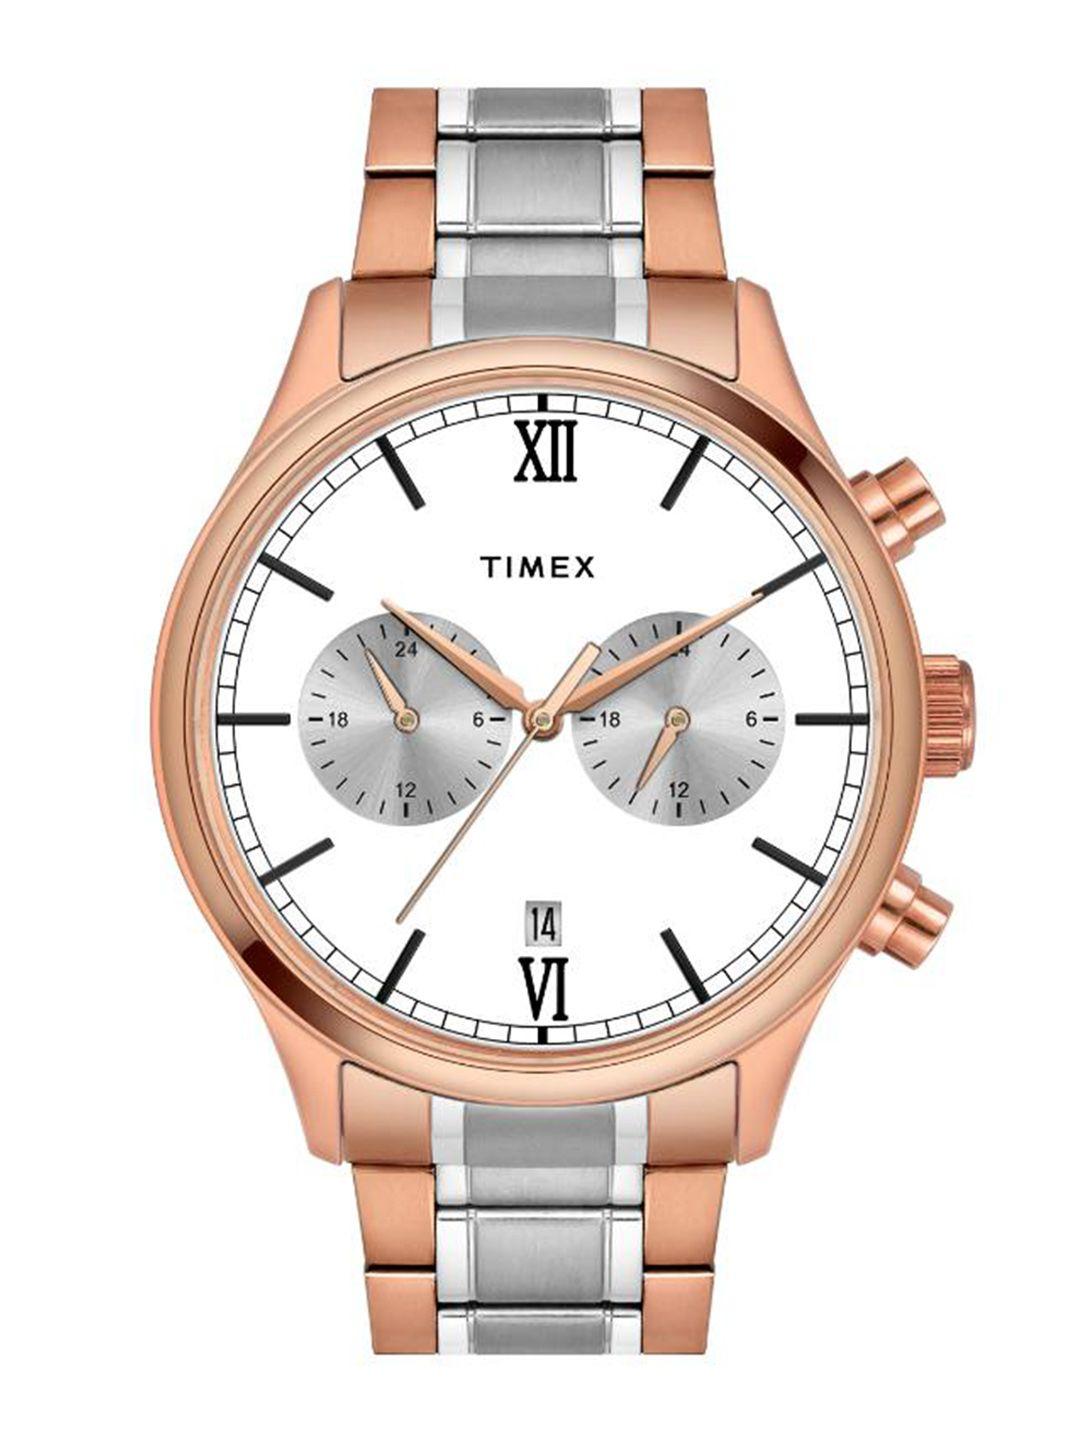 timex men dial & stainless steel bracelet style straps analogue watch tweg19810